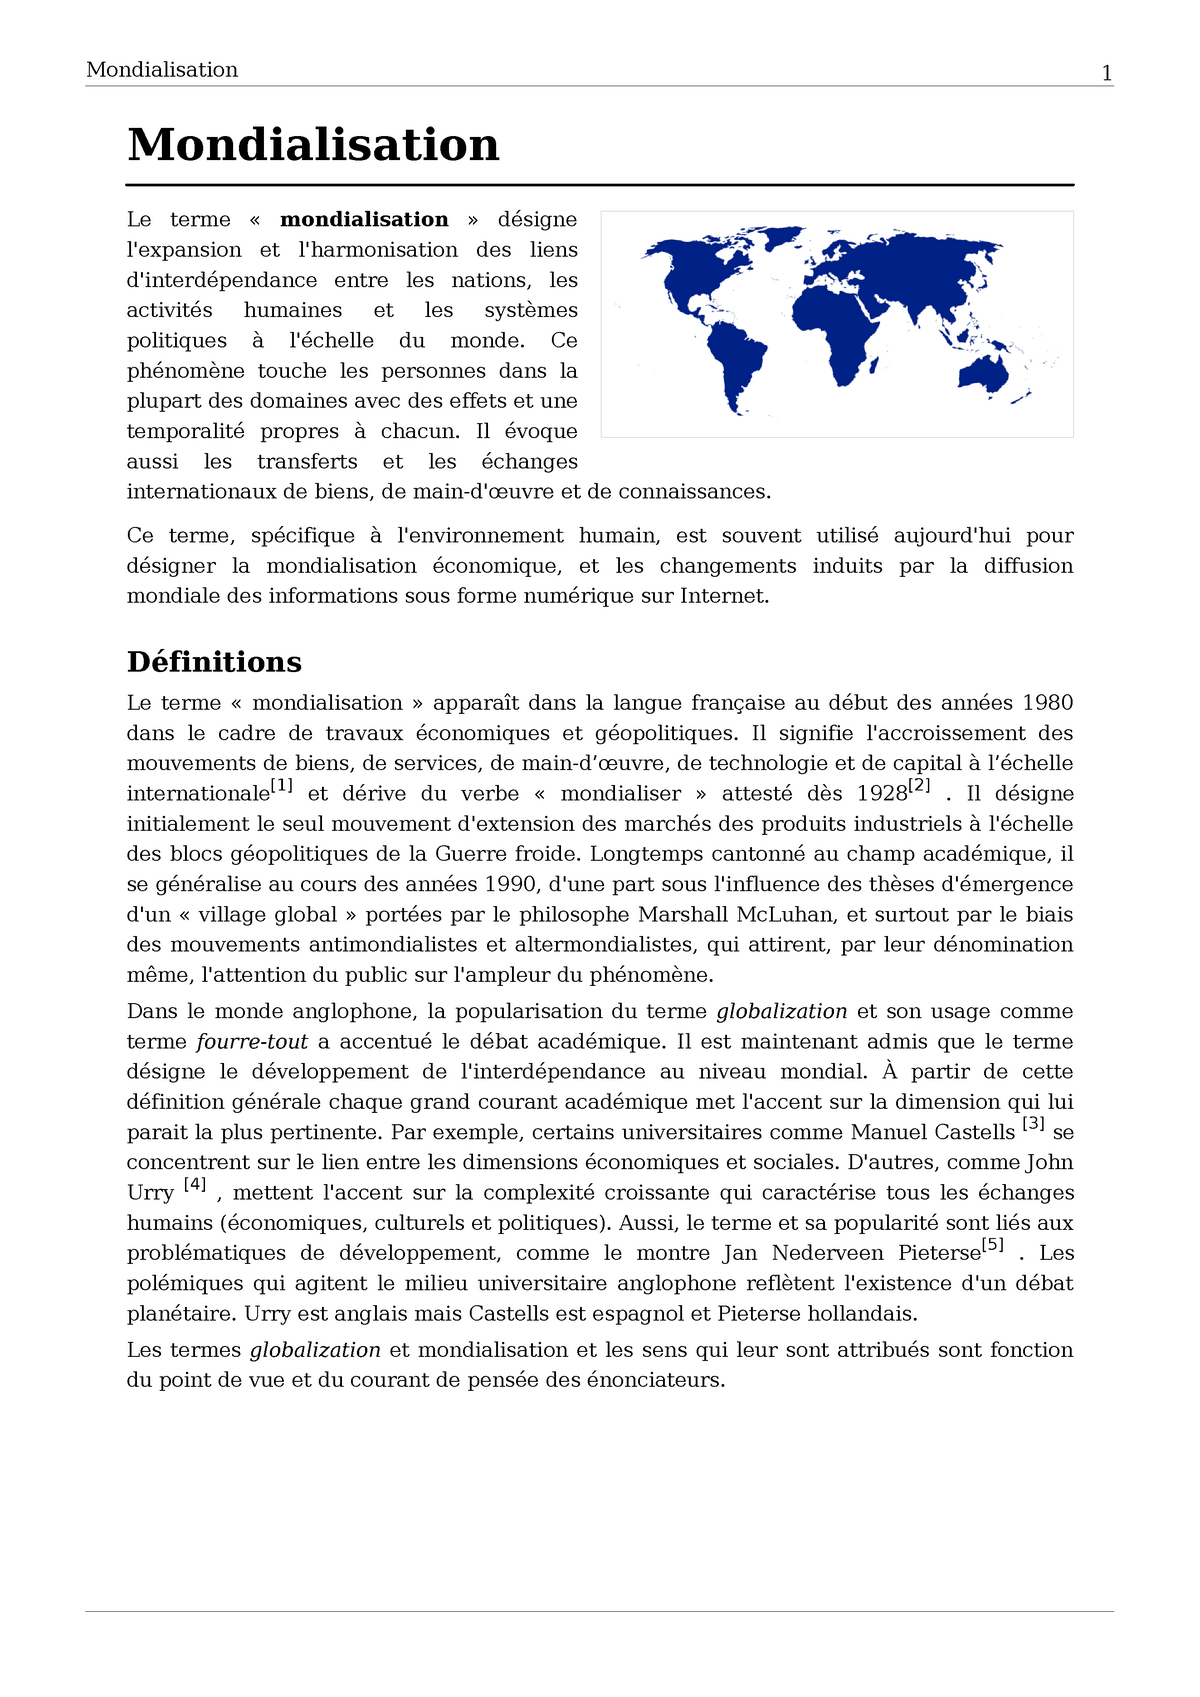 la mondialisation dissertation pdf